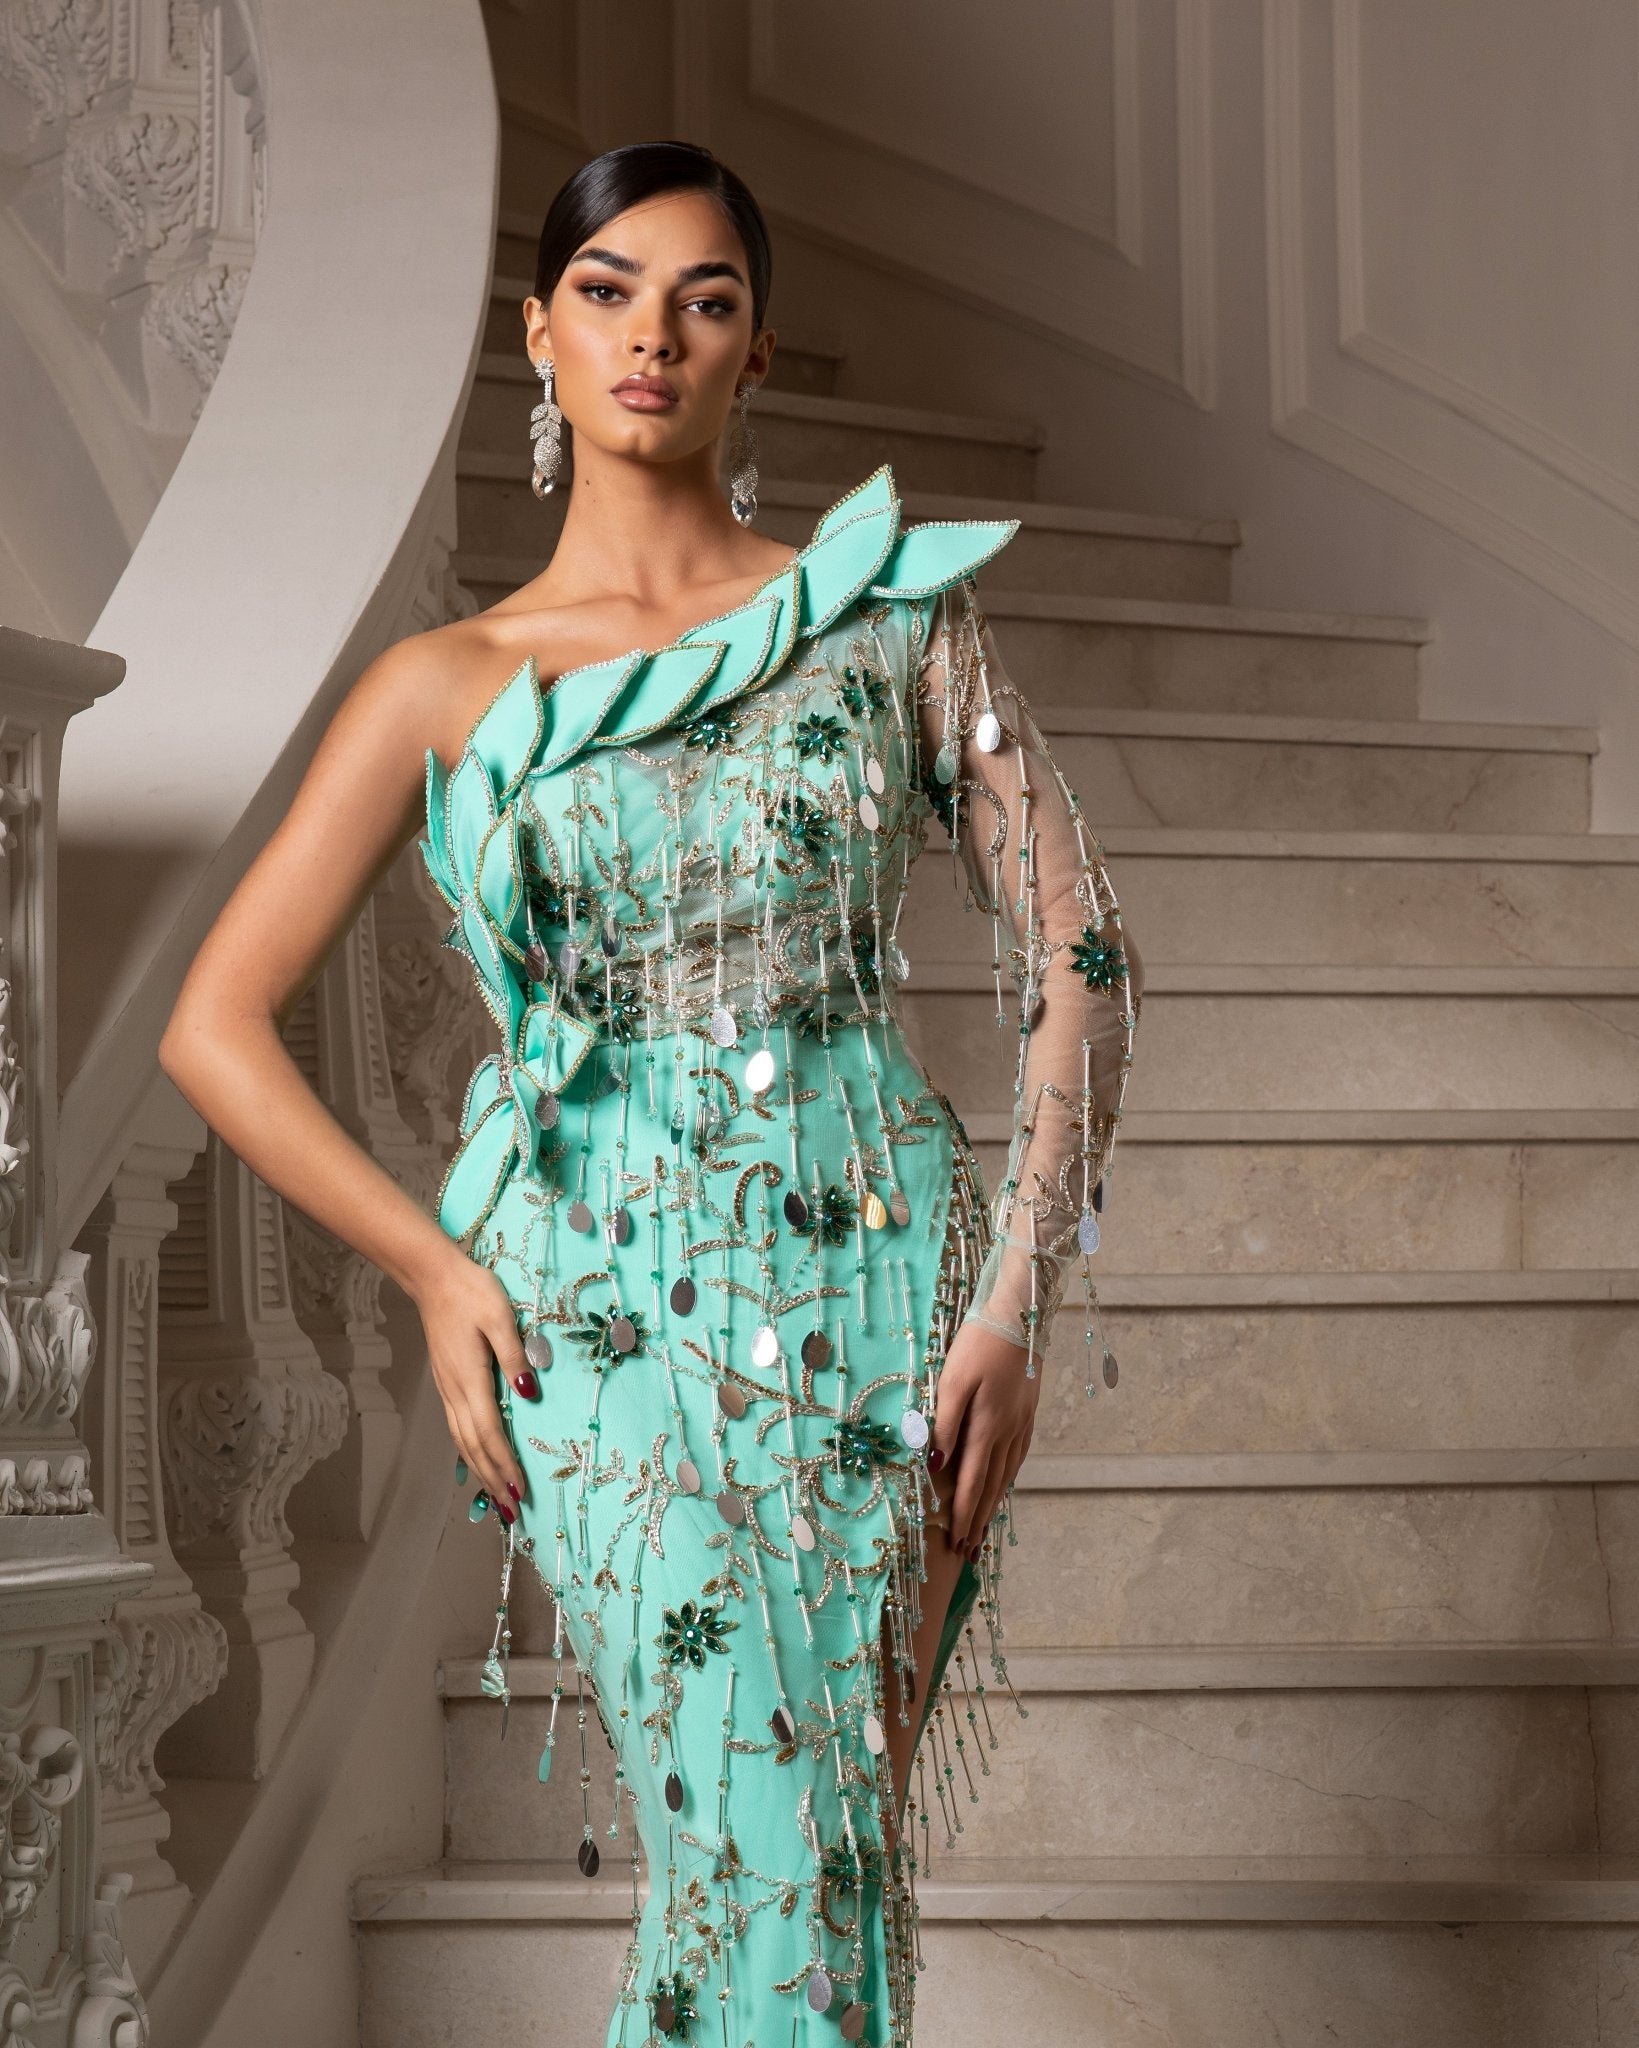 AQUA One-Shoulder Gown - 100% Exclusive | Bloomingdale's